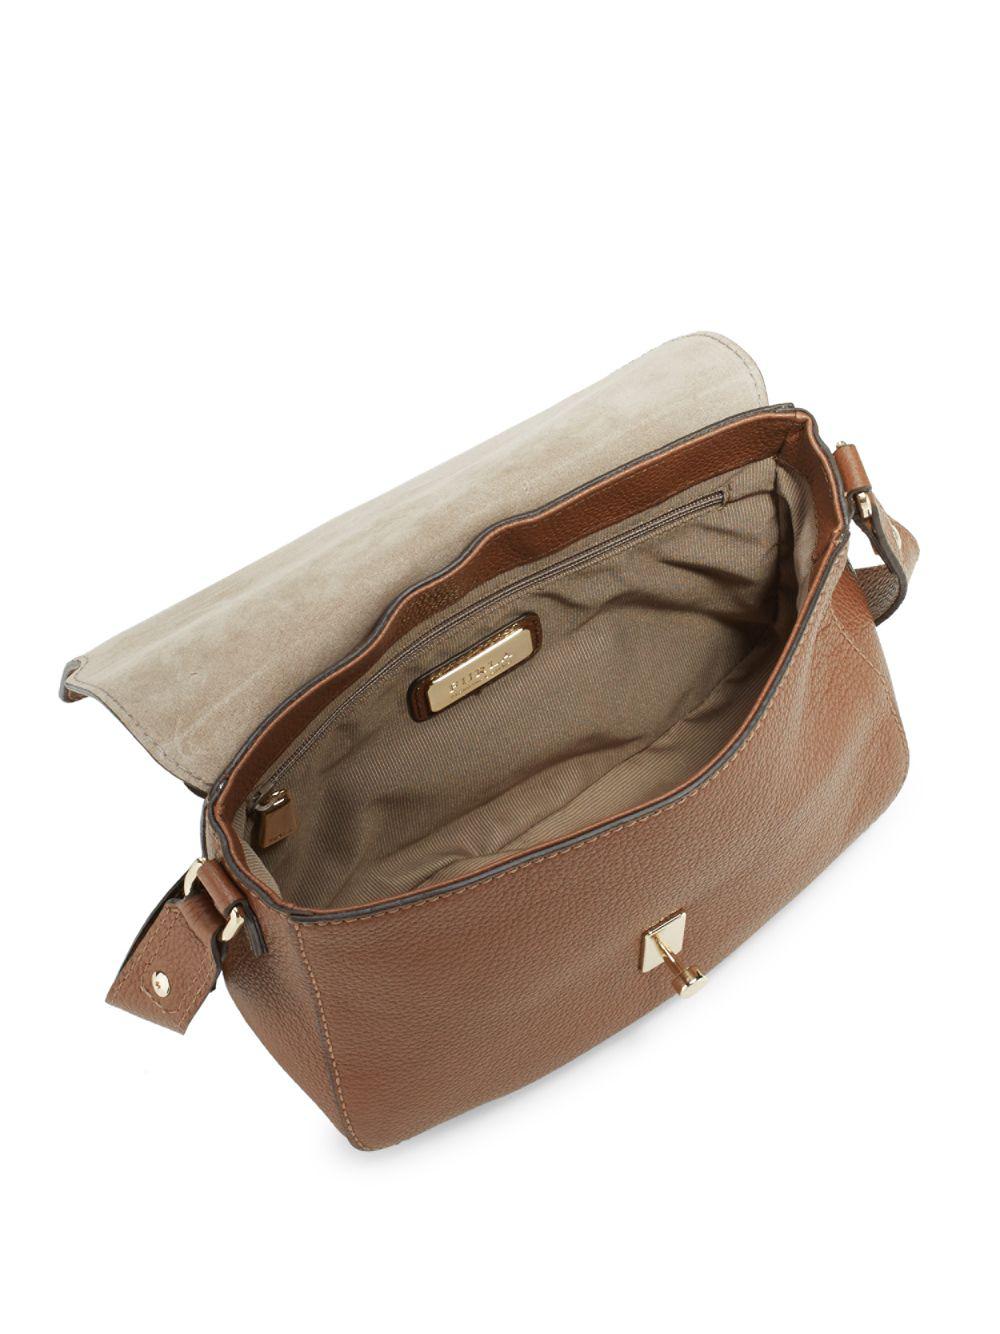 Lyst - Furla Jo M Leather Crossbody Bag in Brown